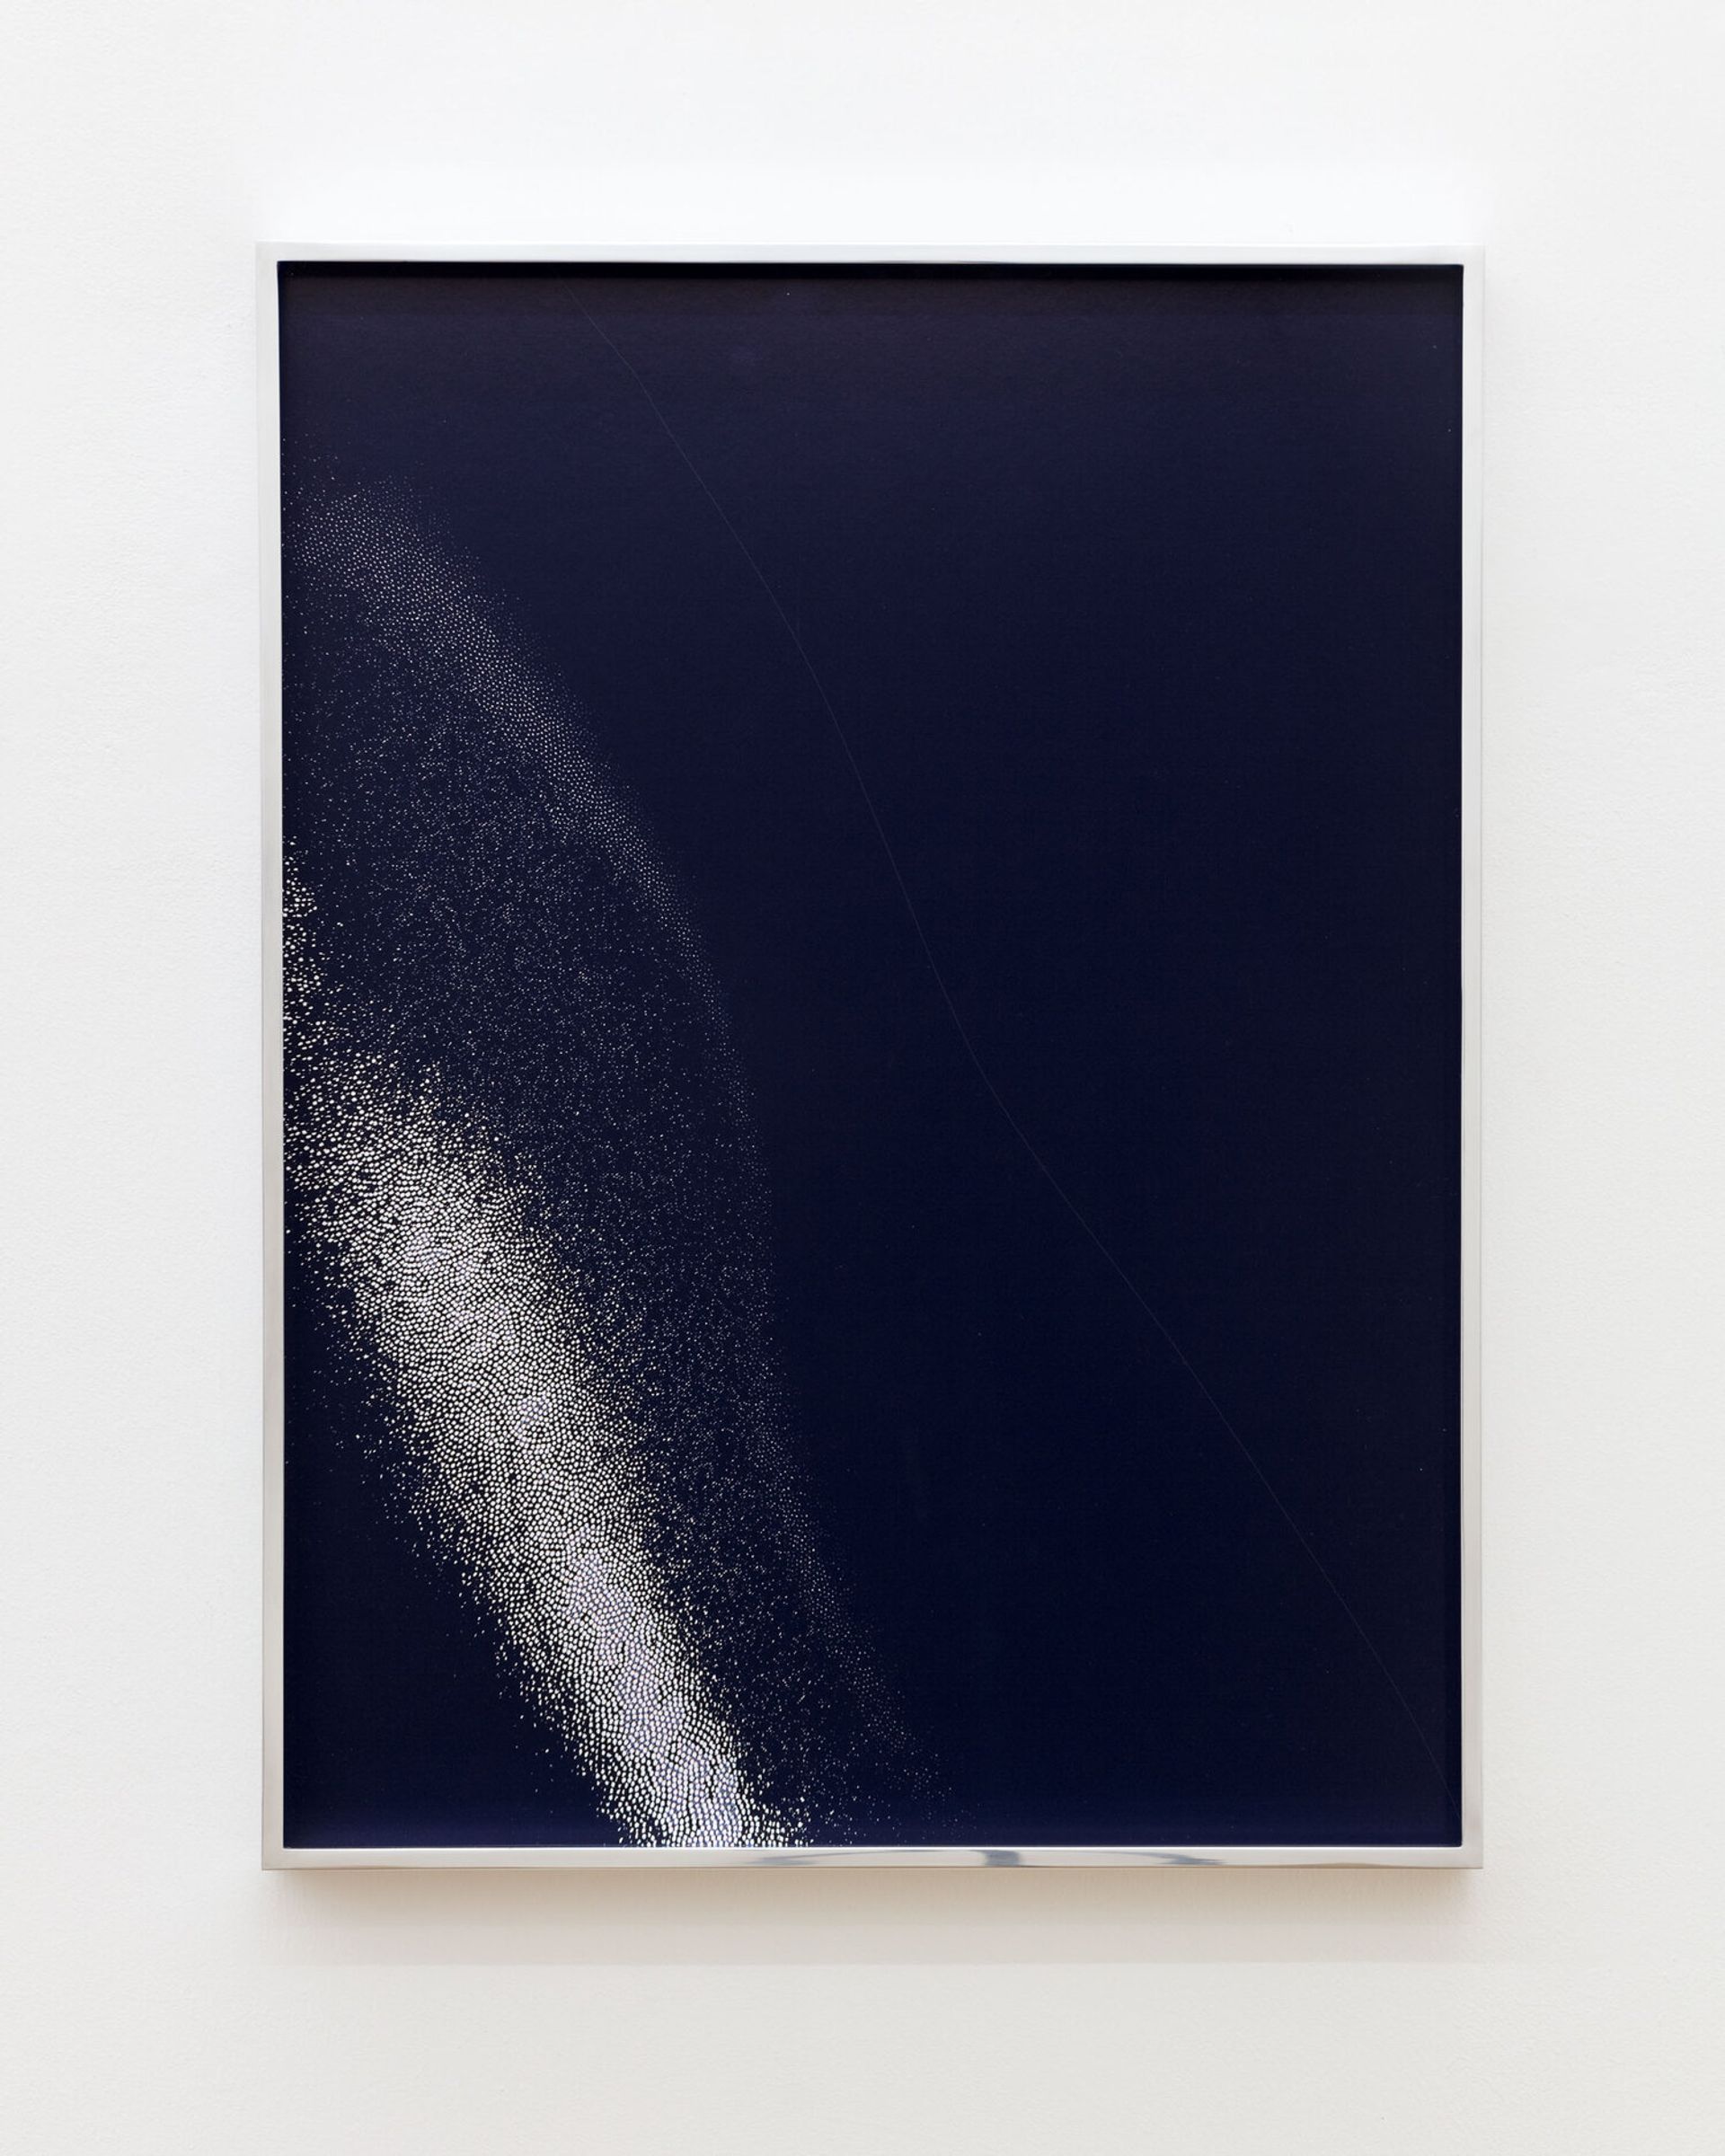 Anna Vogel, Skin I, 2019
inkjet print on backlight foil, framed in polished chrome
60 × 45 cm
edition of 5 + 2AP 

Photo: Sebastian Kissel